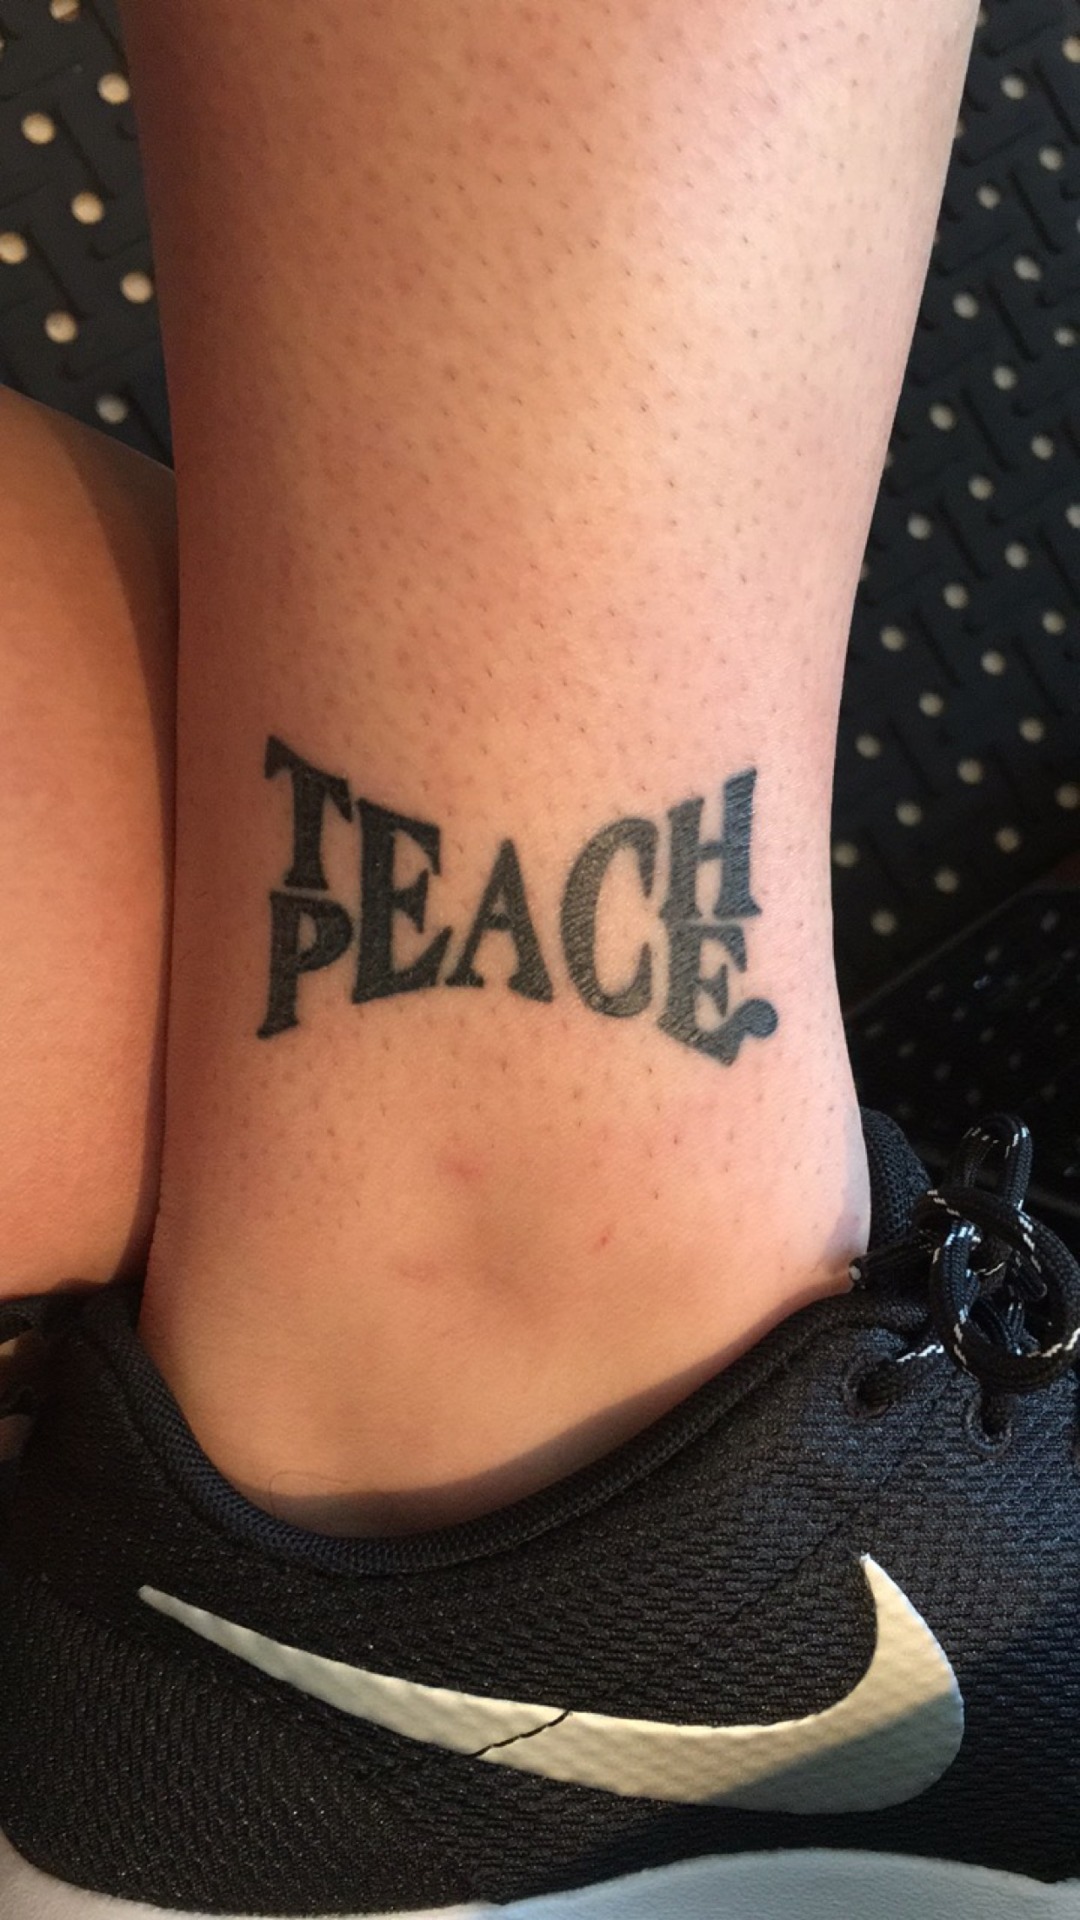 TEACH PEACE lettering tattoo on the forearm